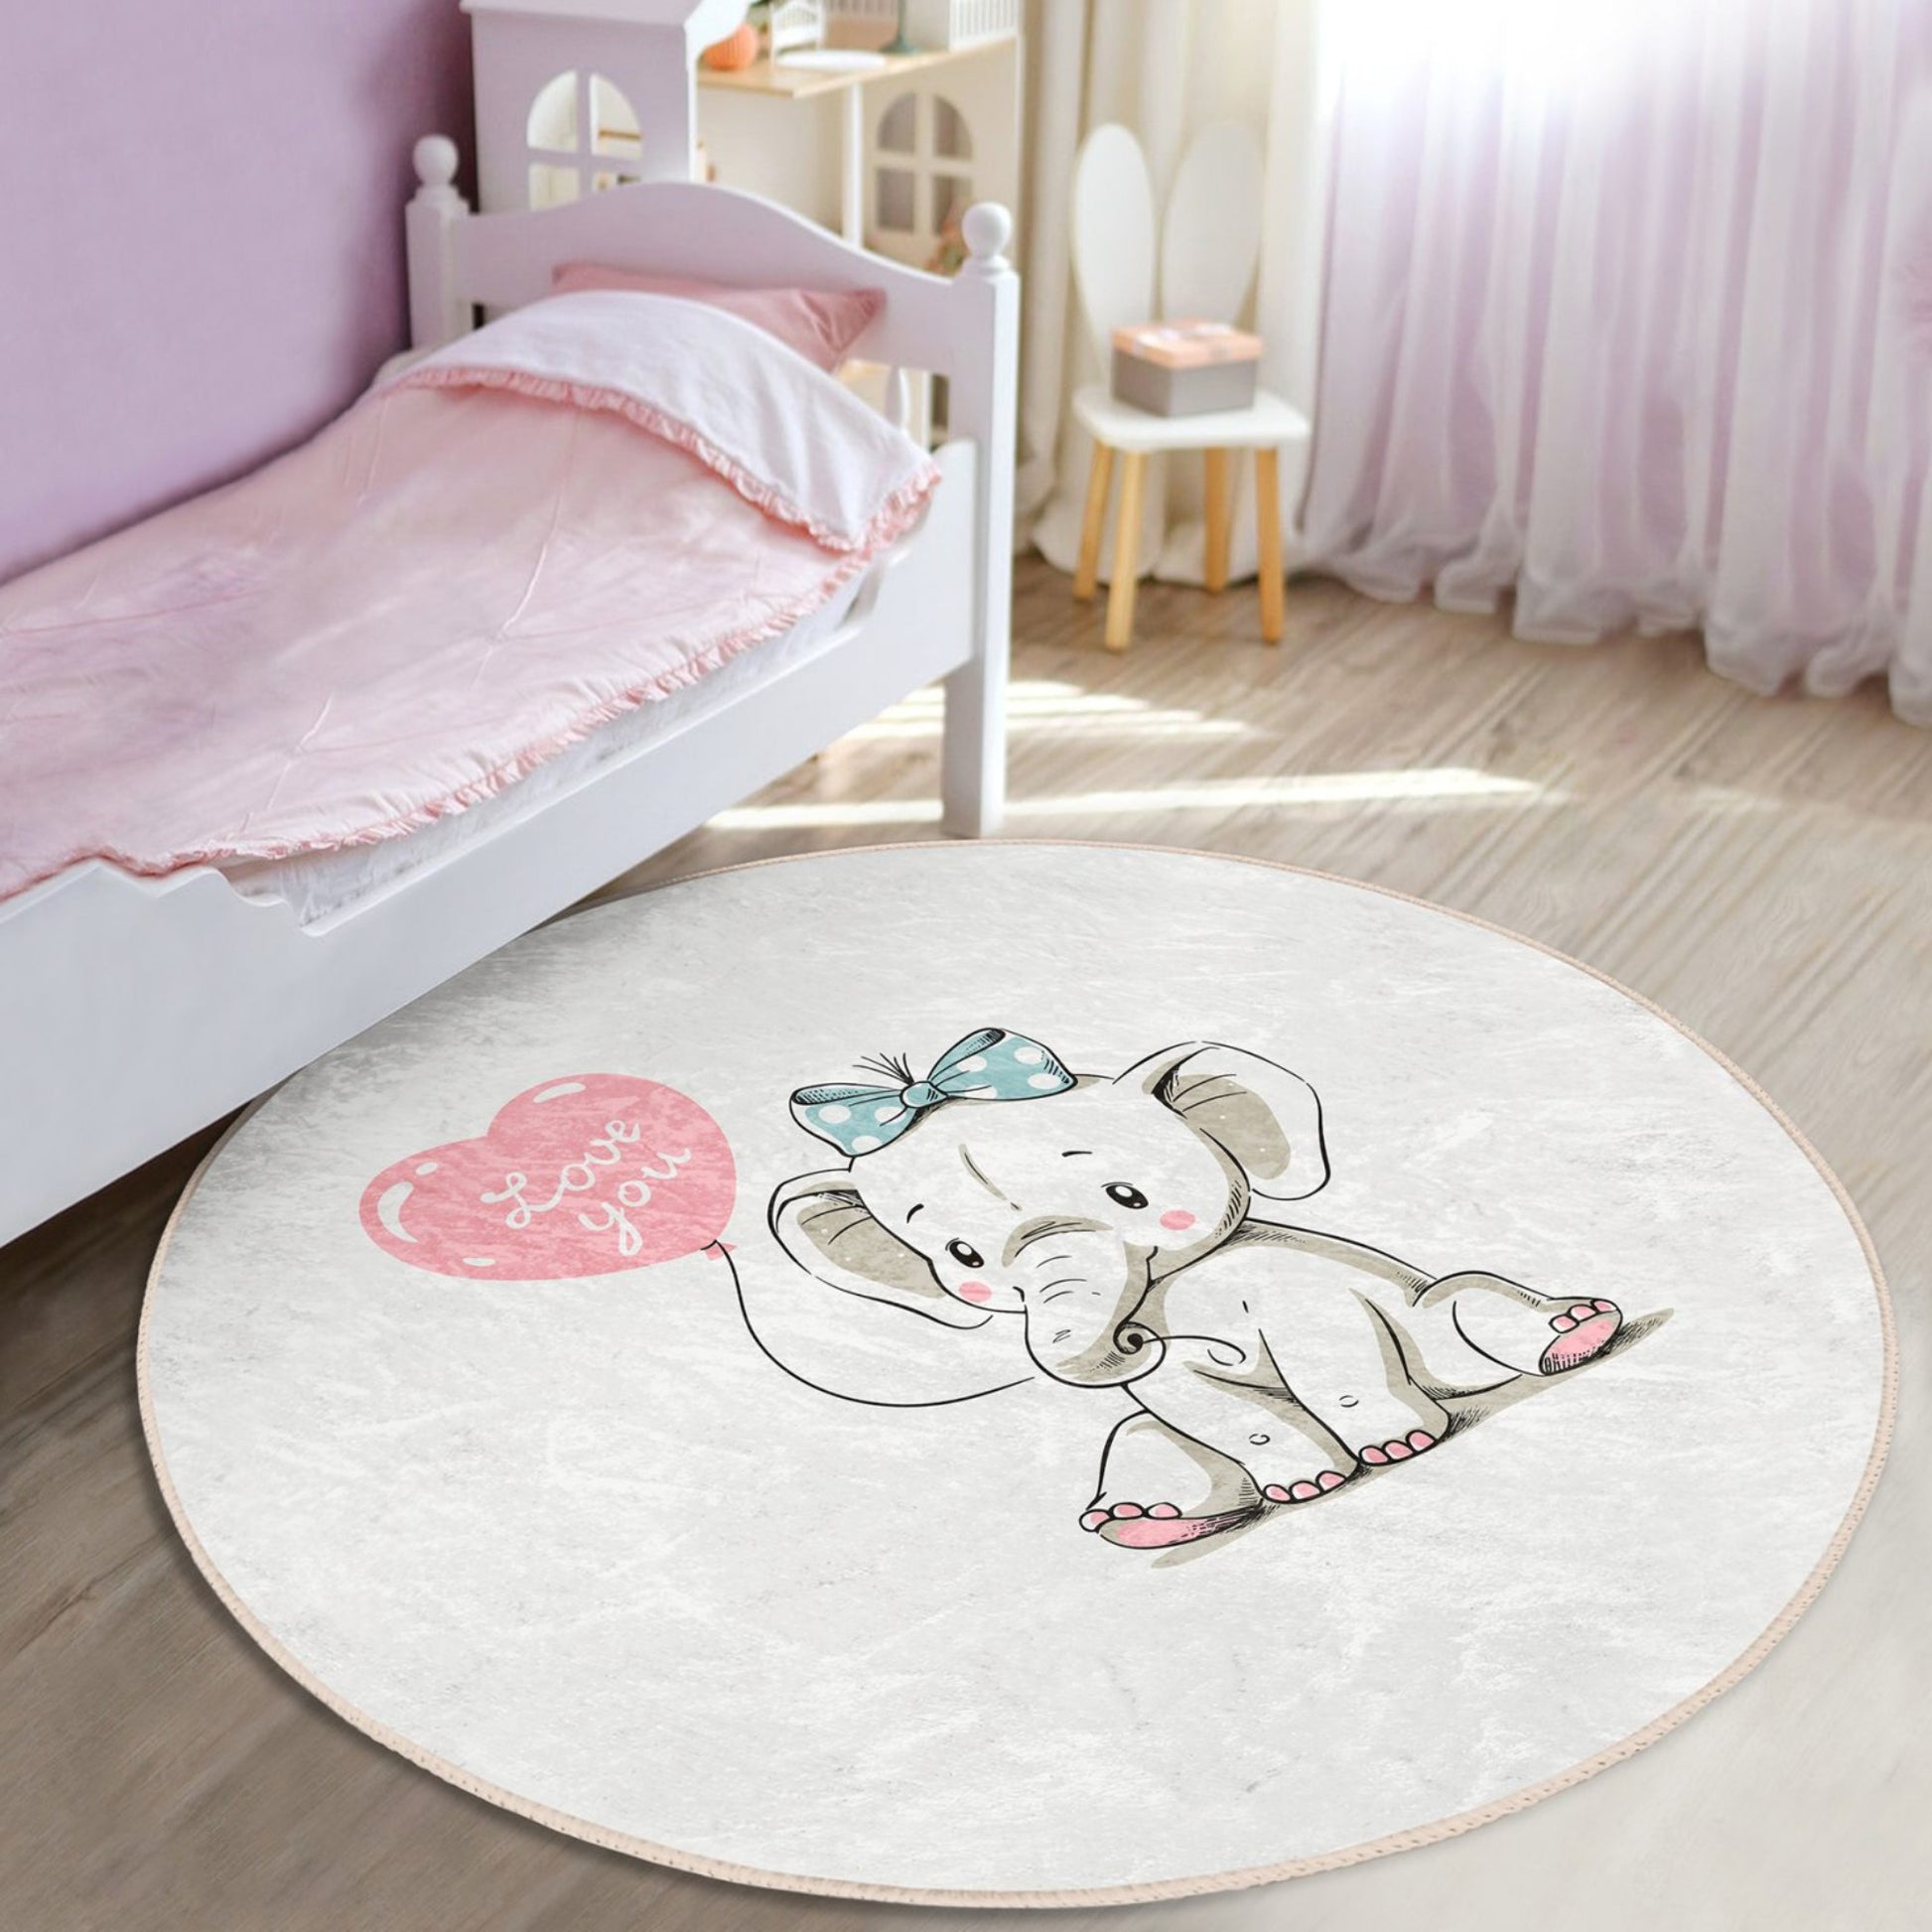 Adorable Elephant Nursery Carpet - Playful Design